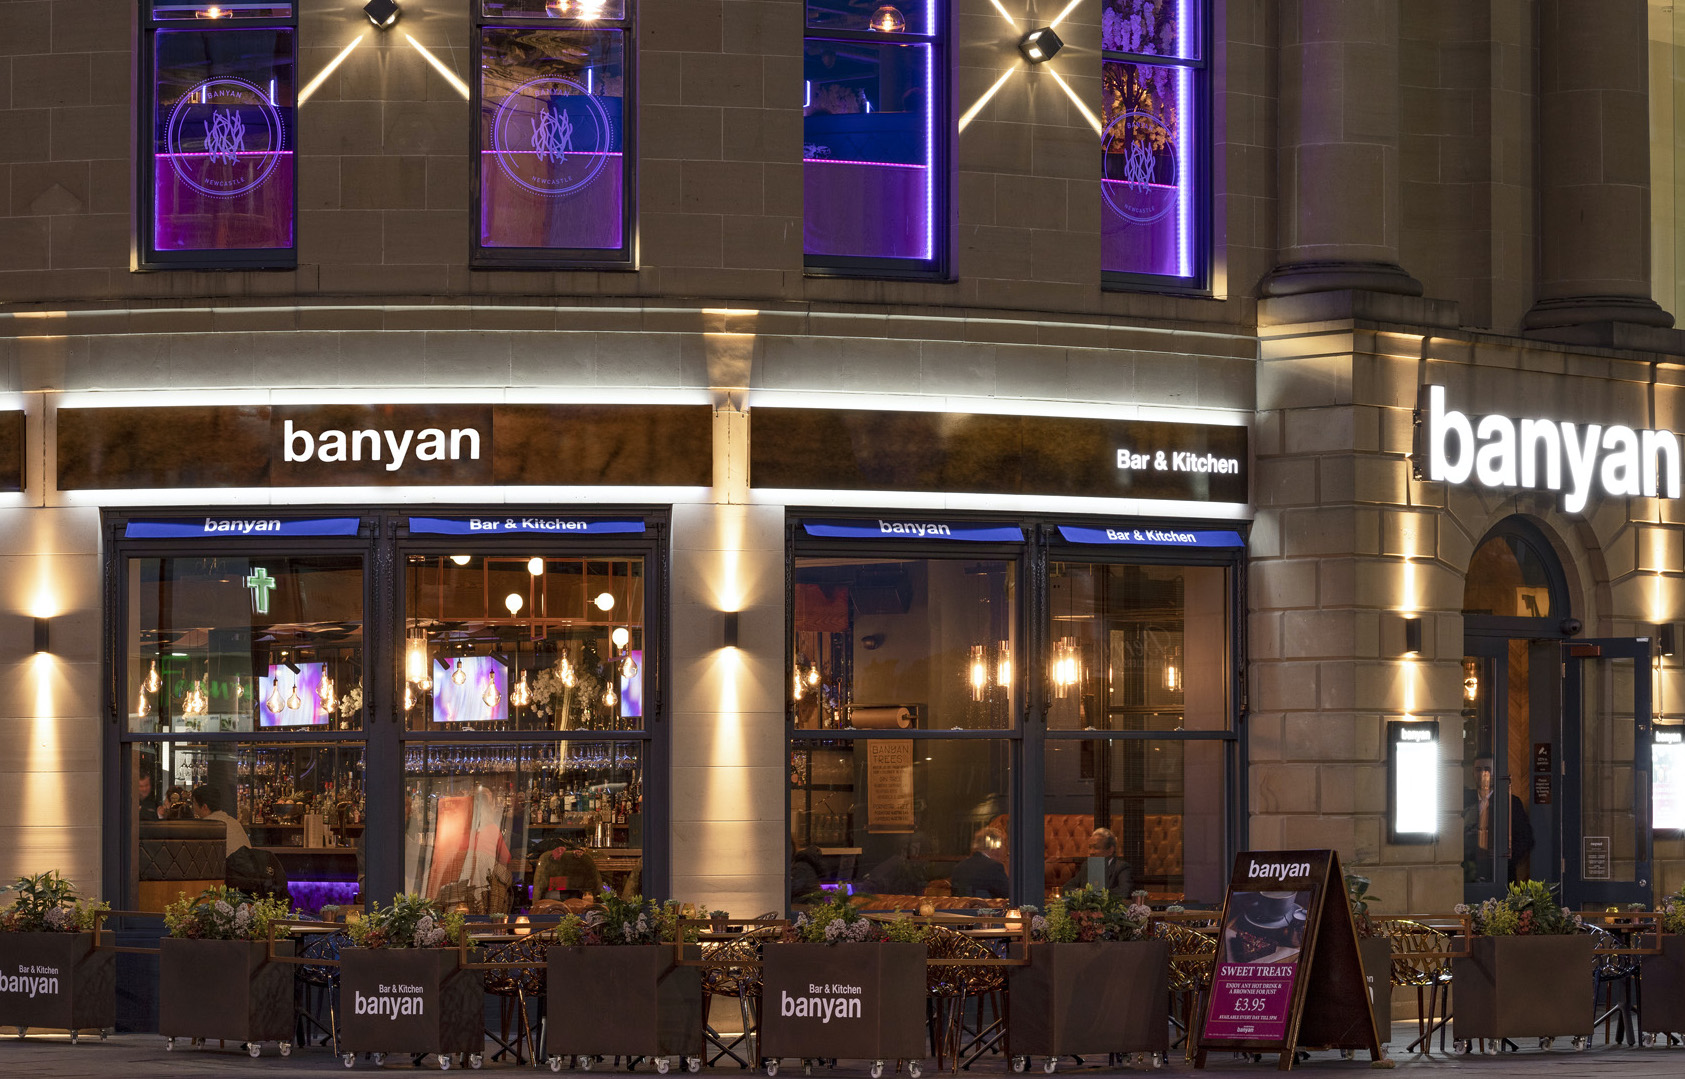 Banyan - Monument Mall on Wednesday 1st November